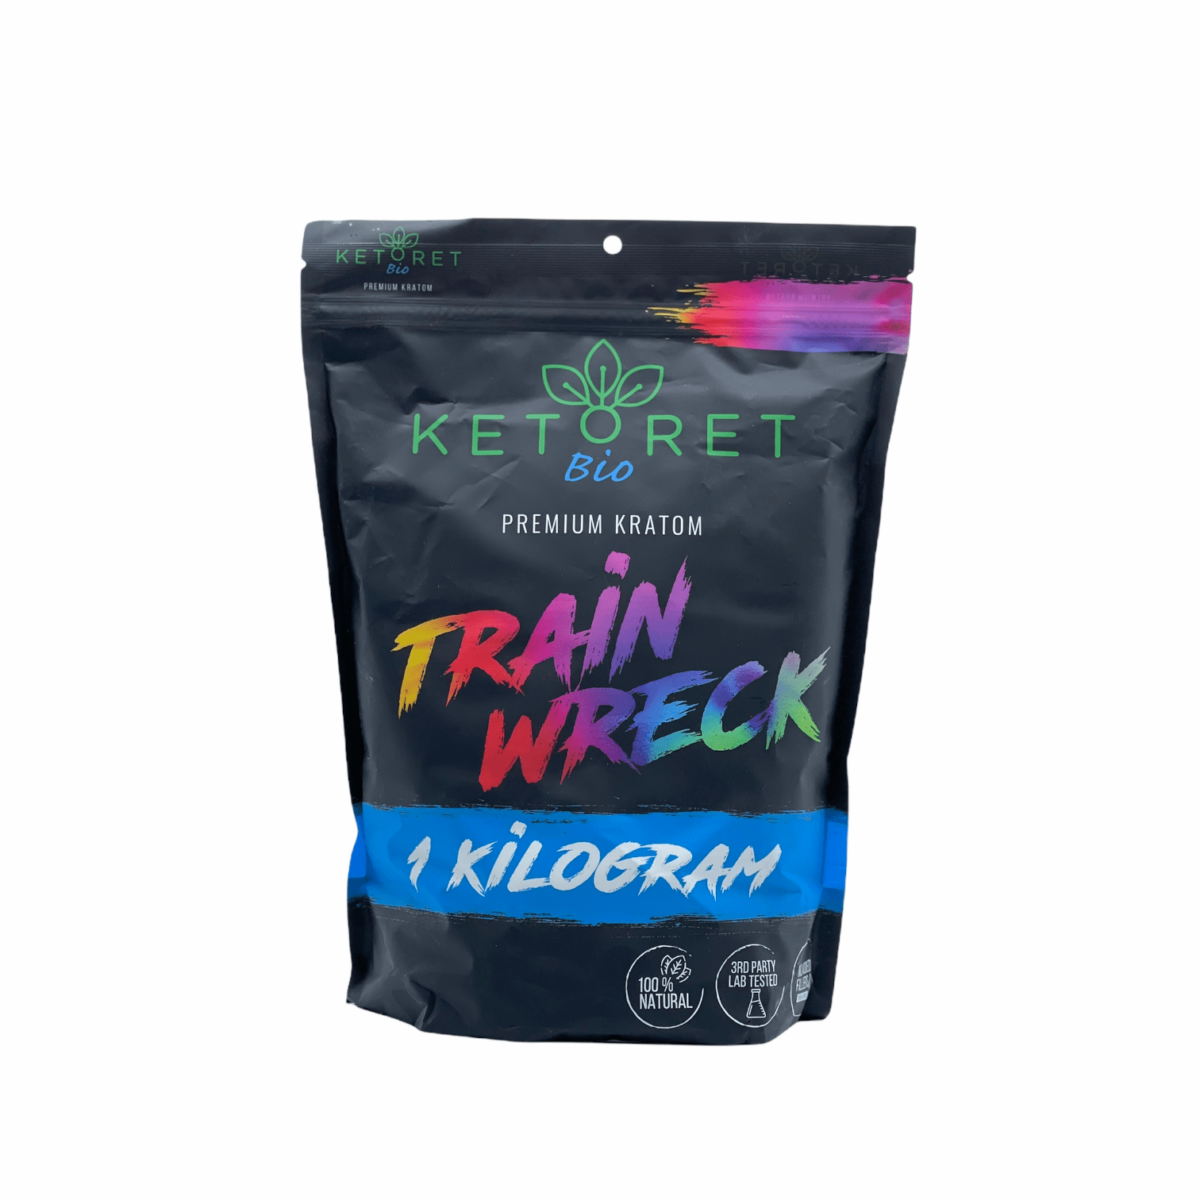 Ketoret Bionaturals Trainwreck Kratom Powder